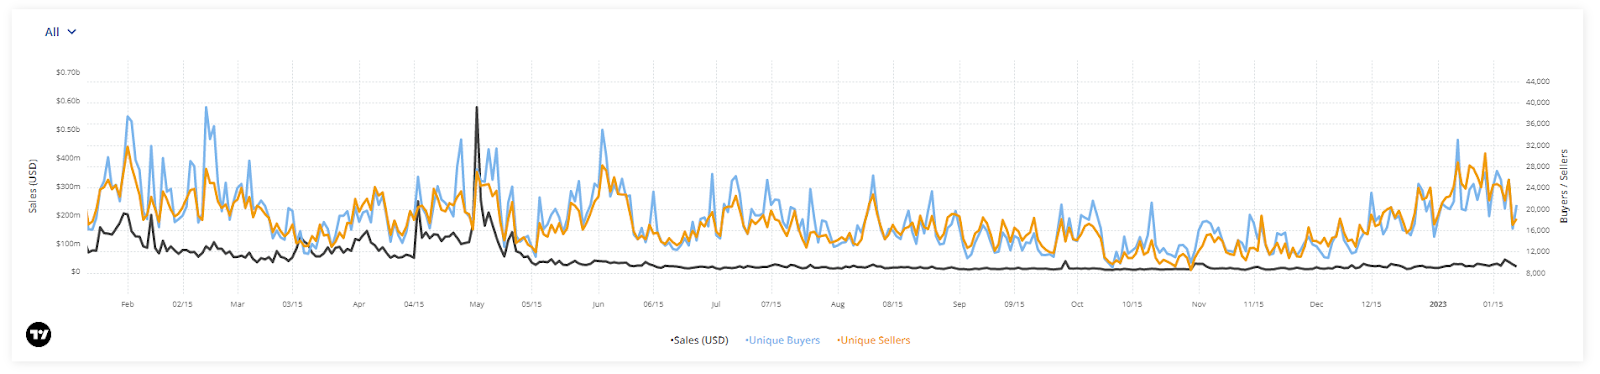 NFT Sales, Unique Buyers, and Unique Selles on Ethereum in the Last 12 Months. 